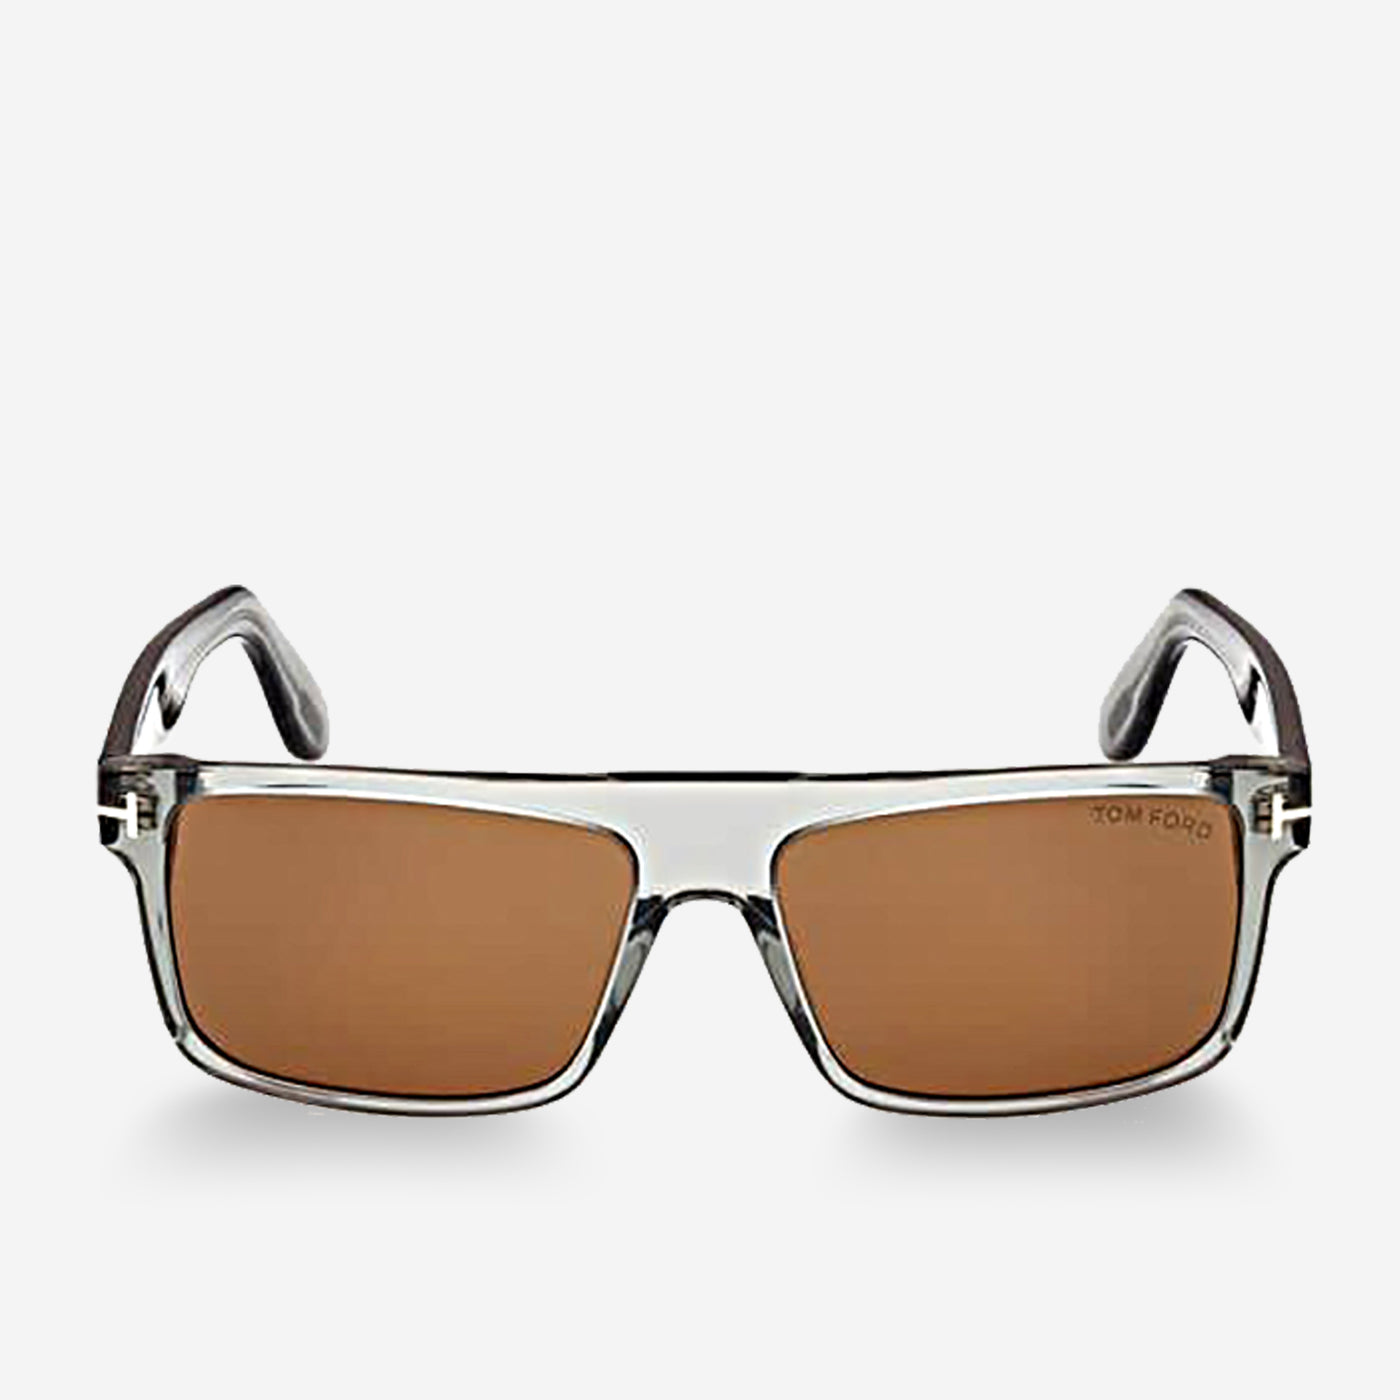 Tom Ford Philippe Sunglasses